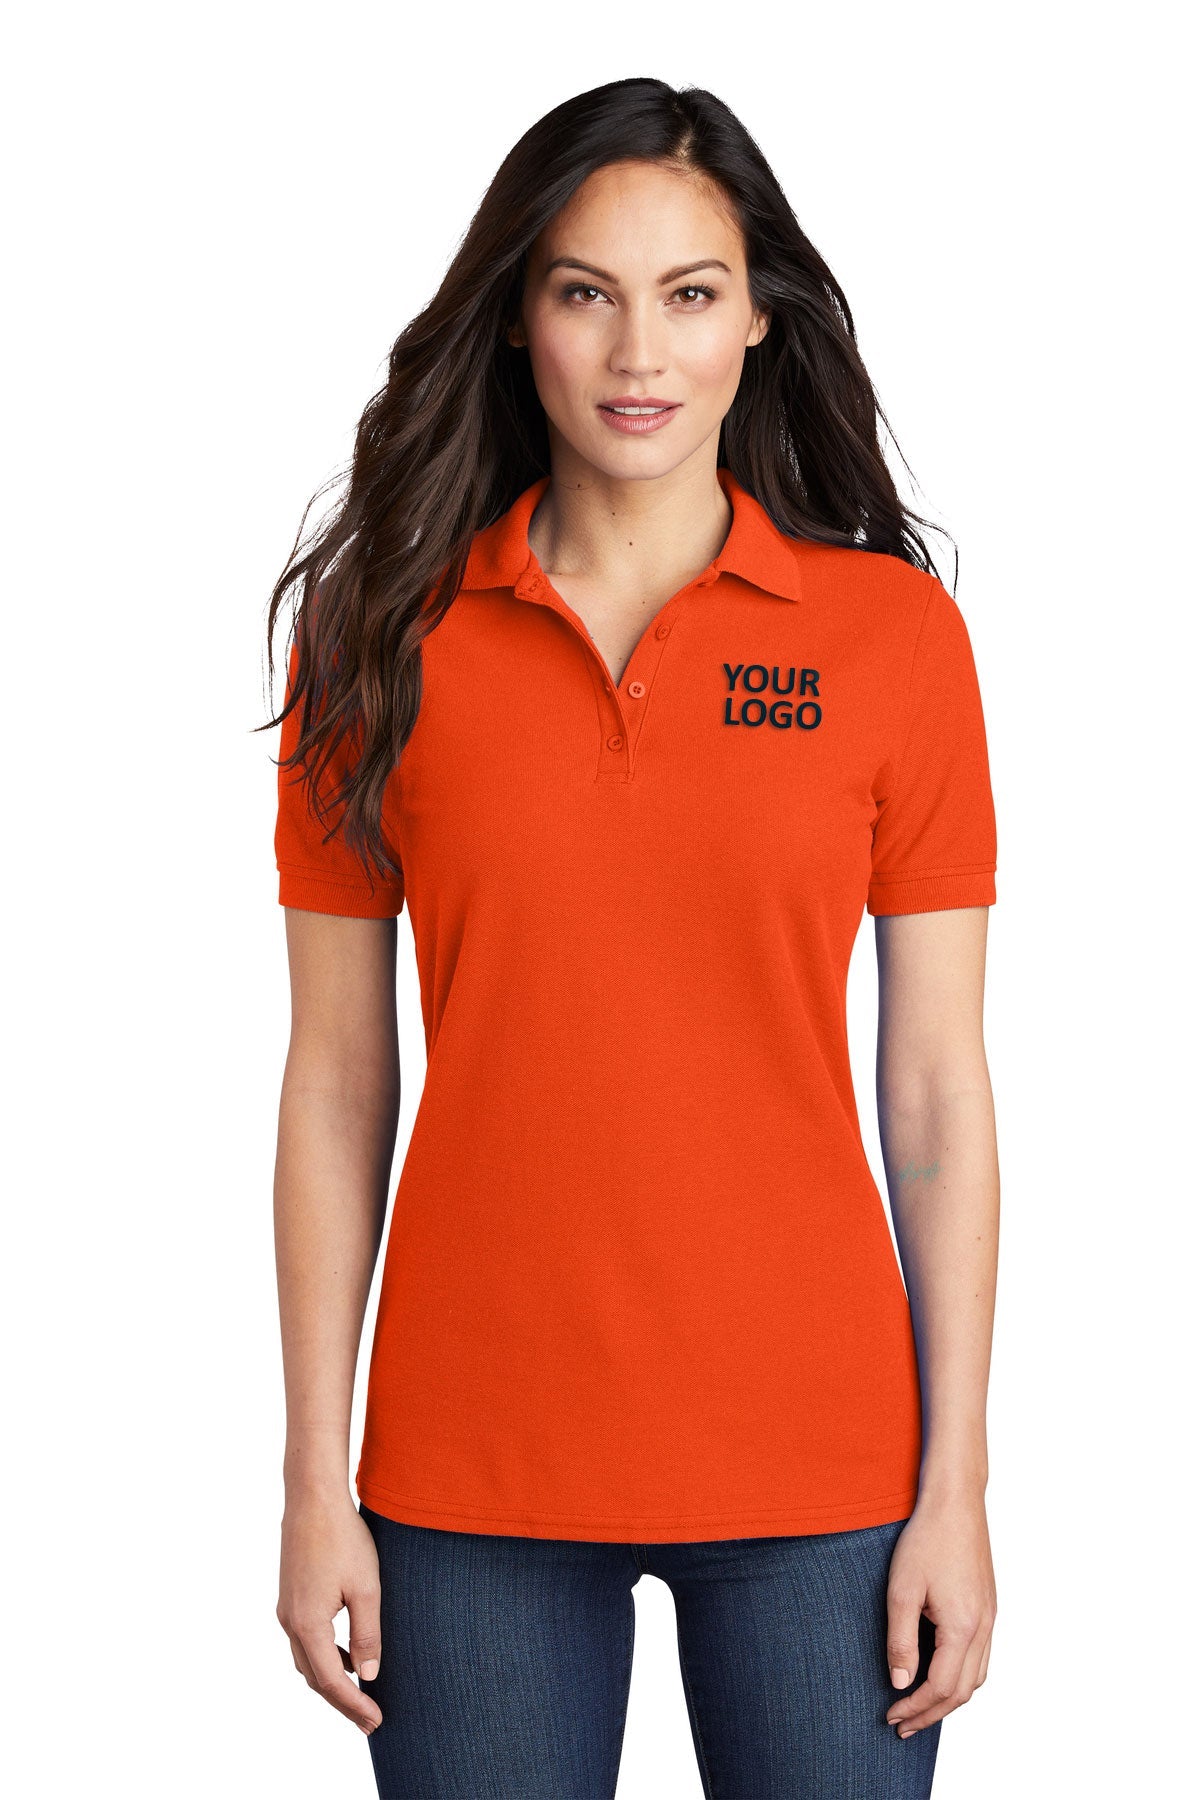 port & company orange lkp155 custom polo shirts with logo